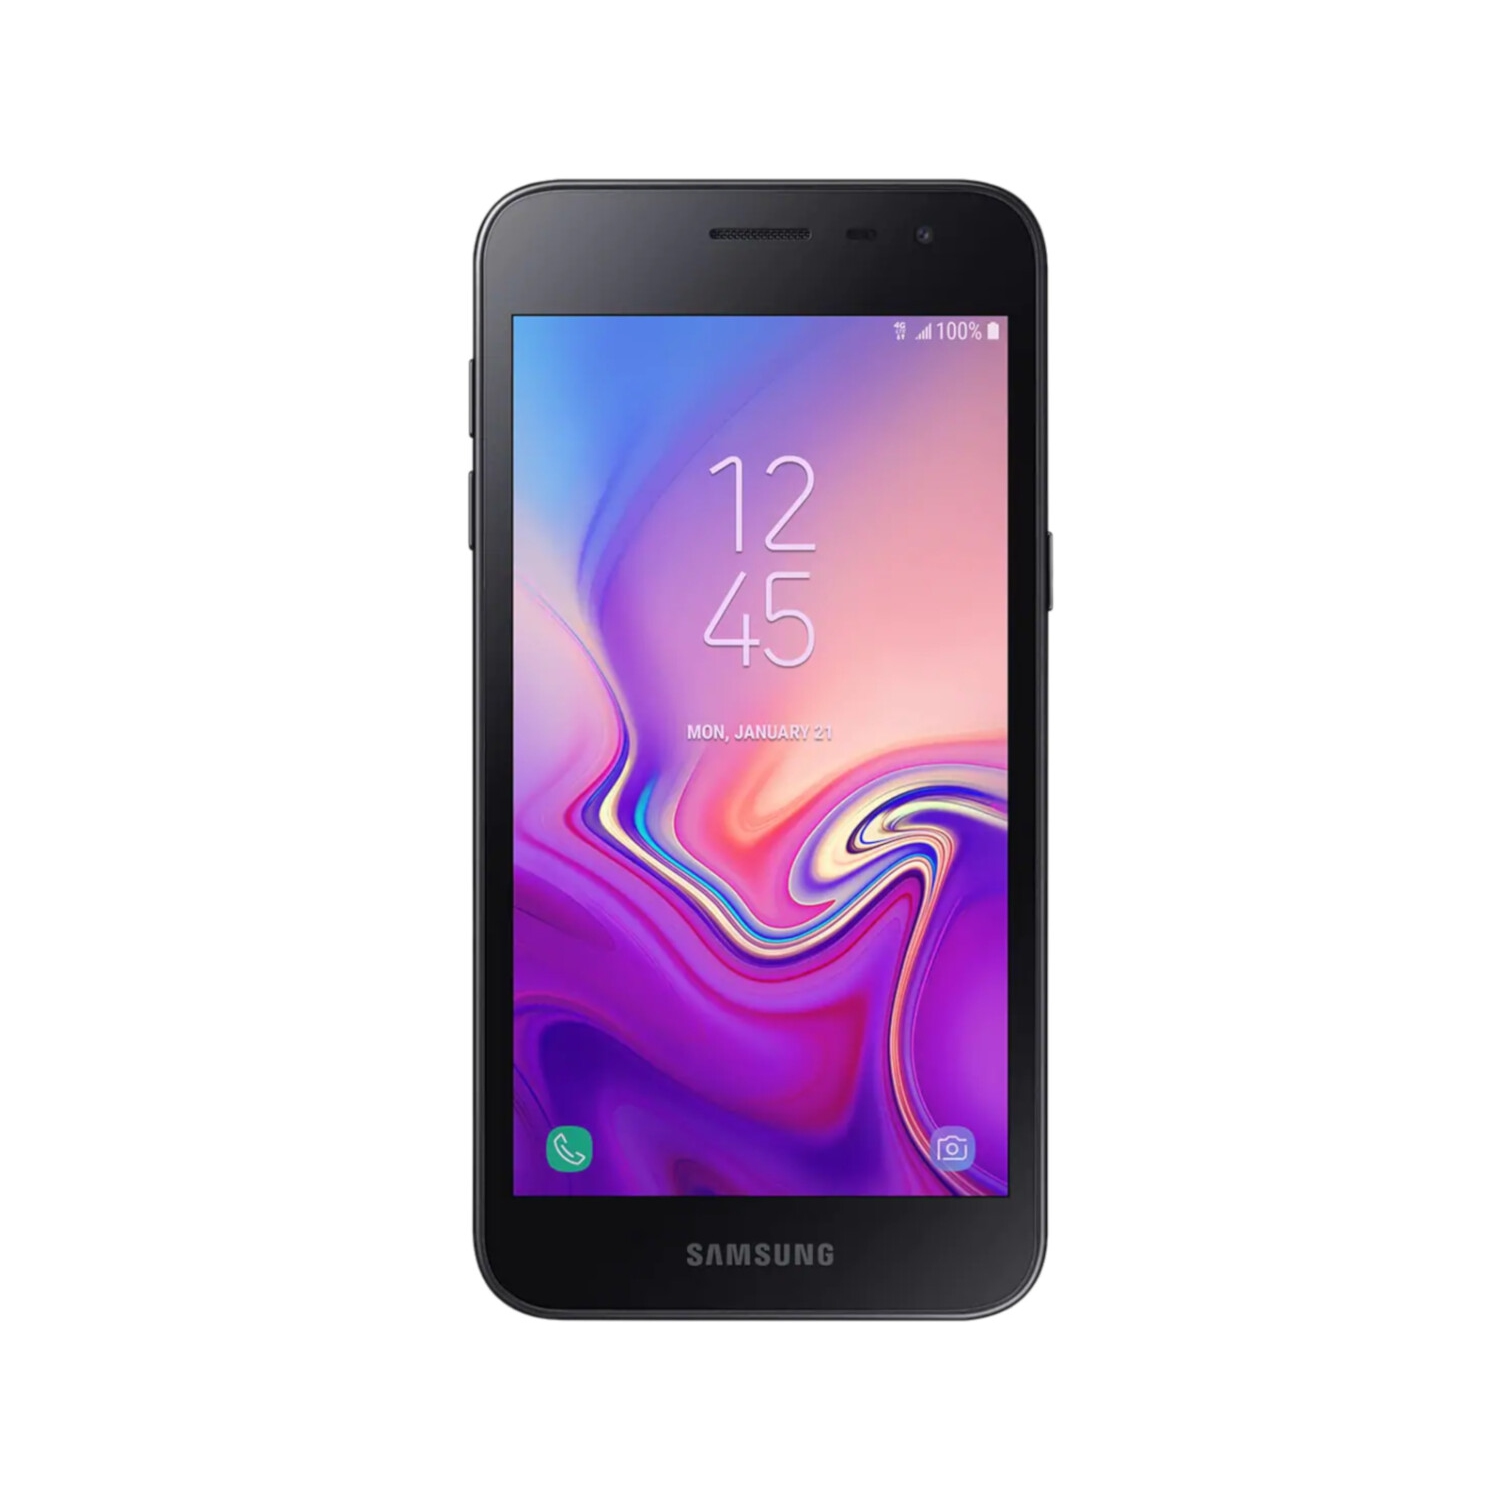 Refurbished (Good) - Samsung Galaxy J2, 2018, 16GB, Black, 5", Factory Unlocked Smartphone 4G /LTE